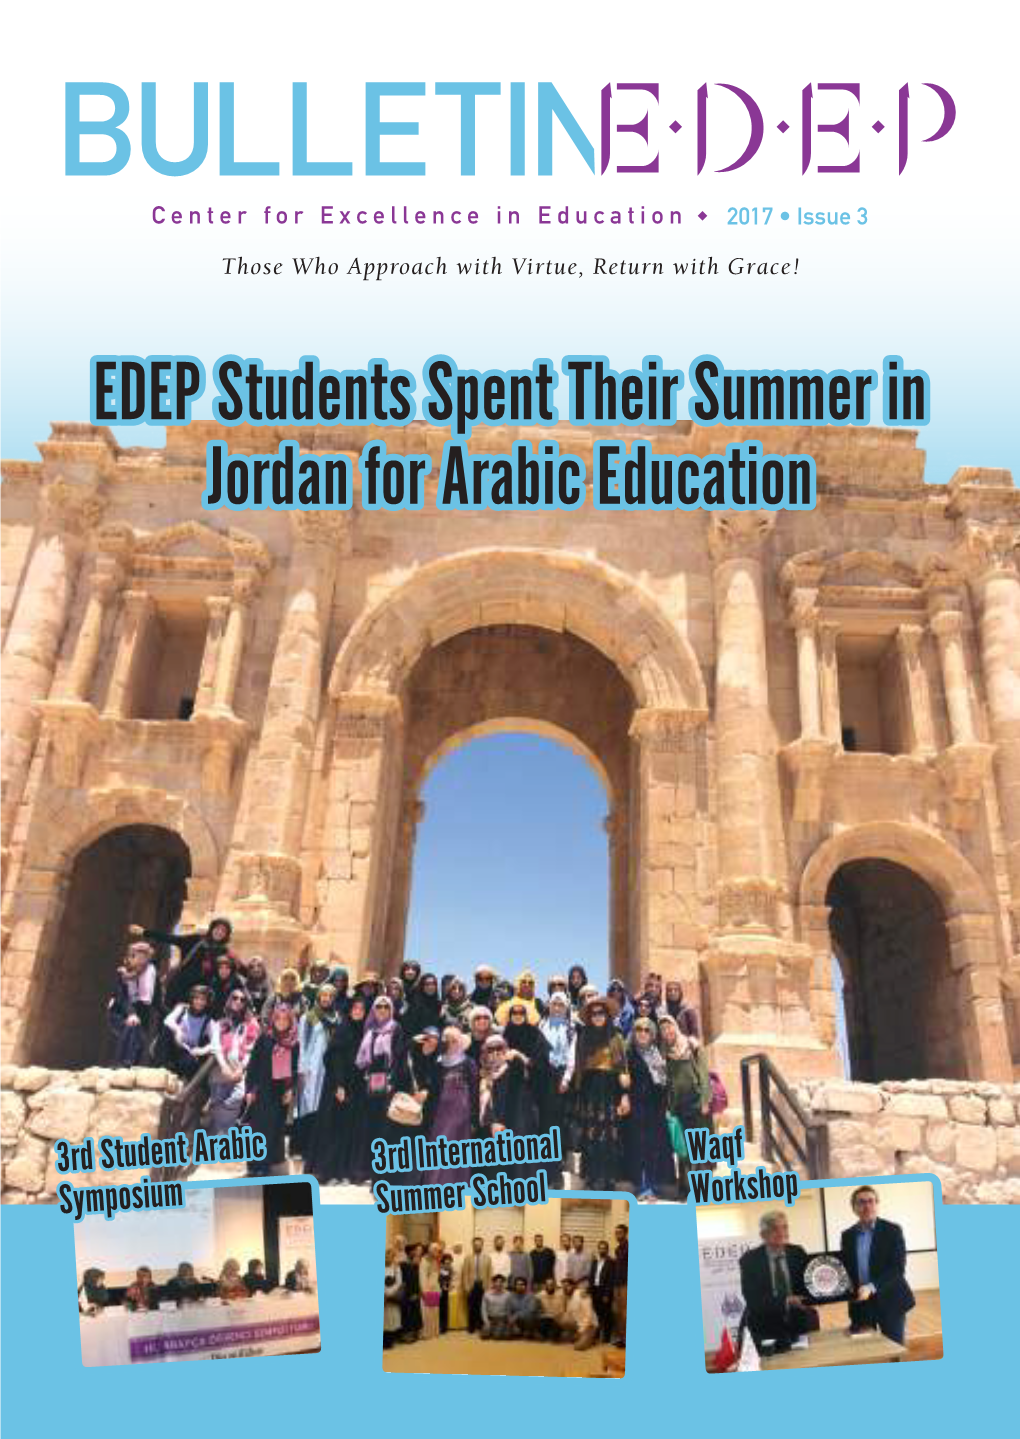 EDEP Students Spent Their Summer in Jordan for Arabic Education